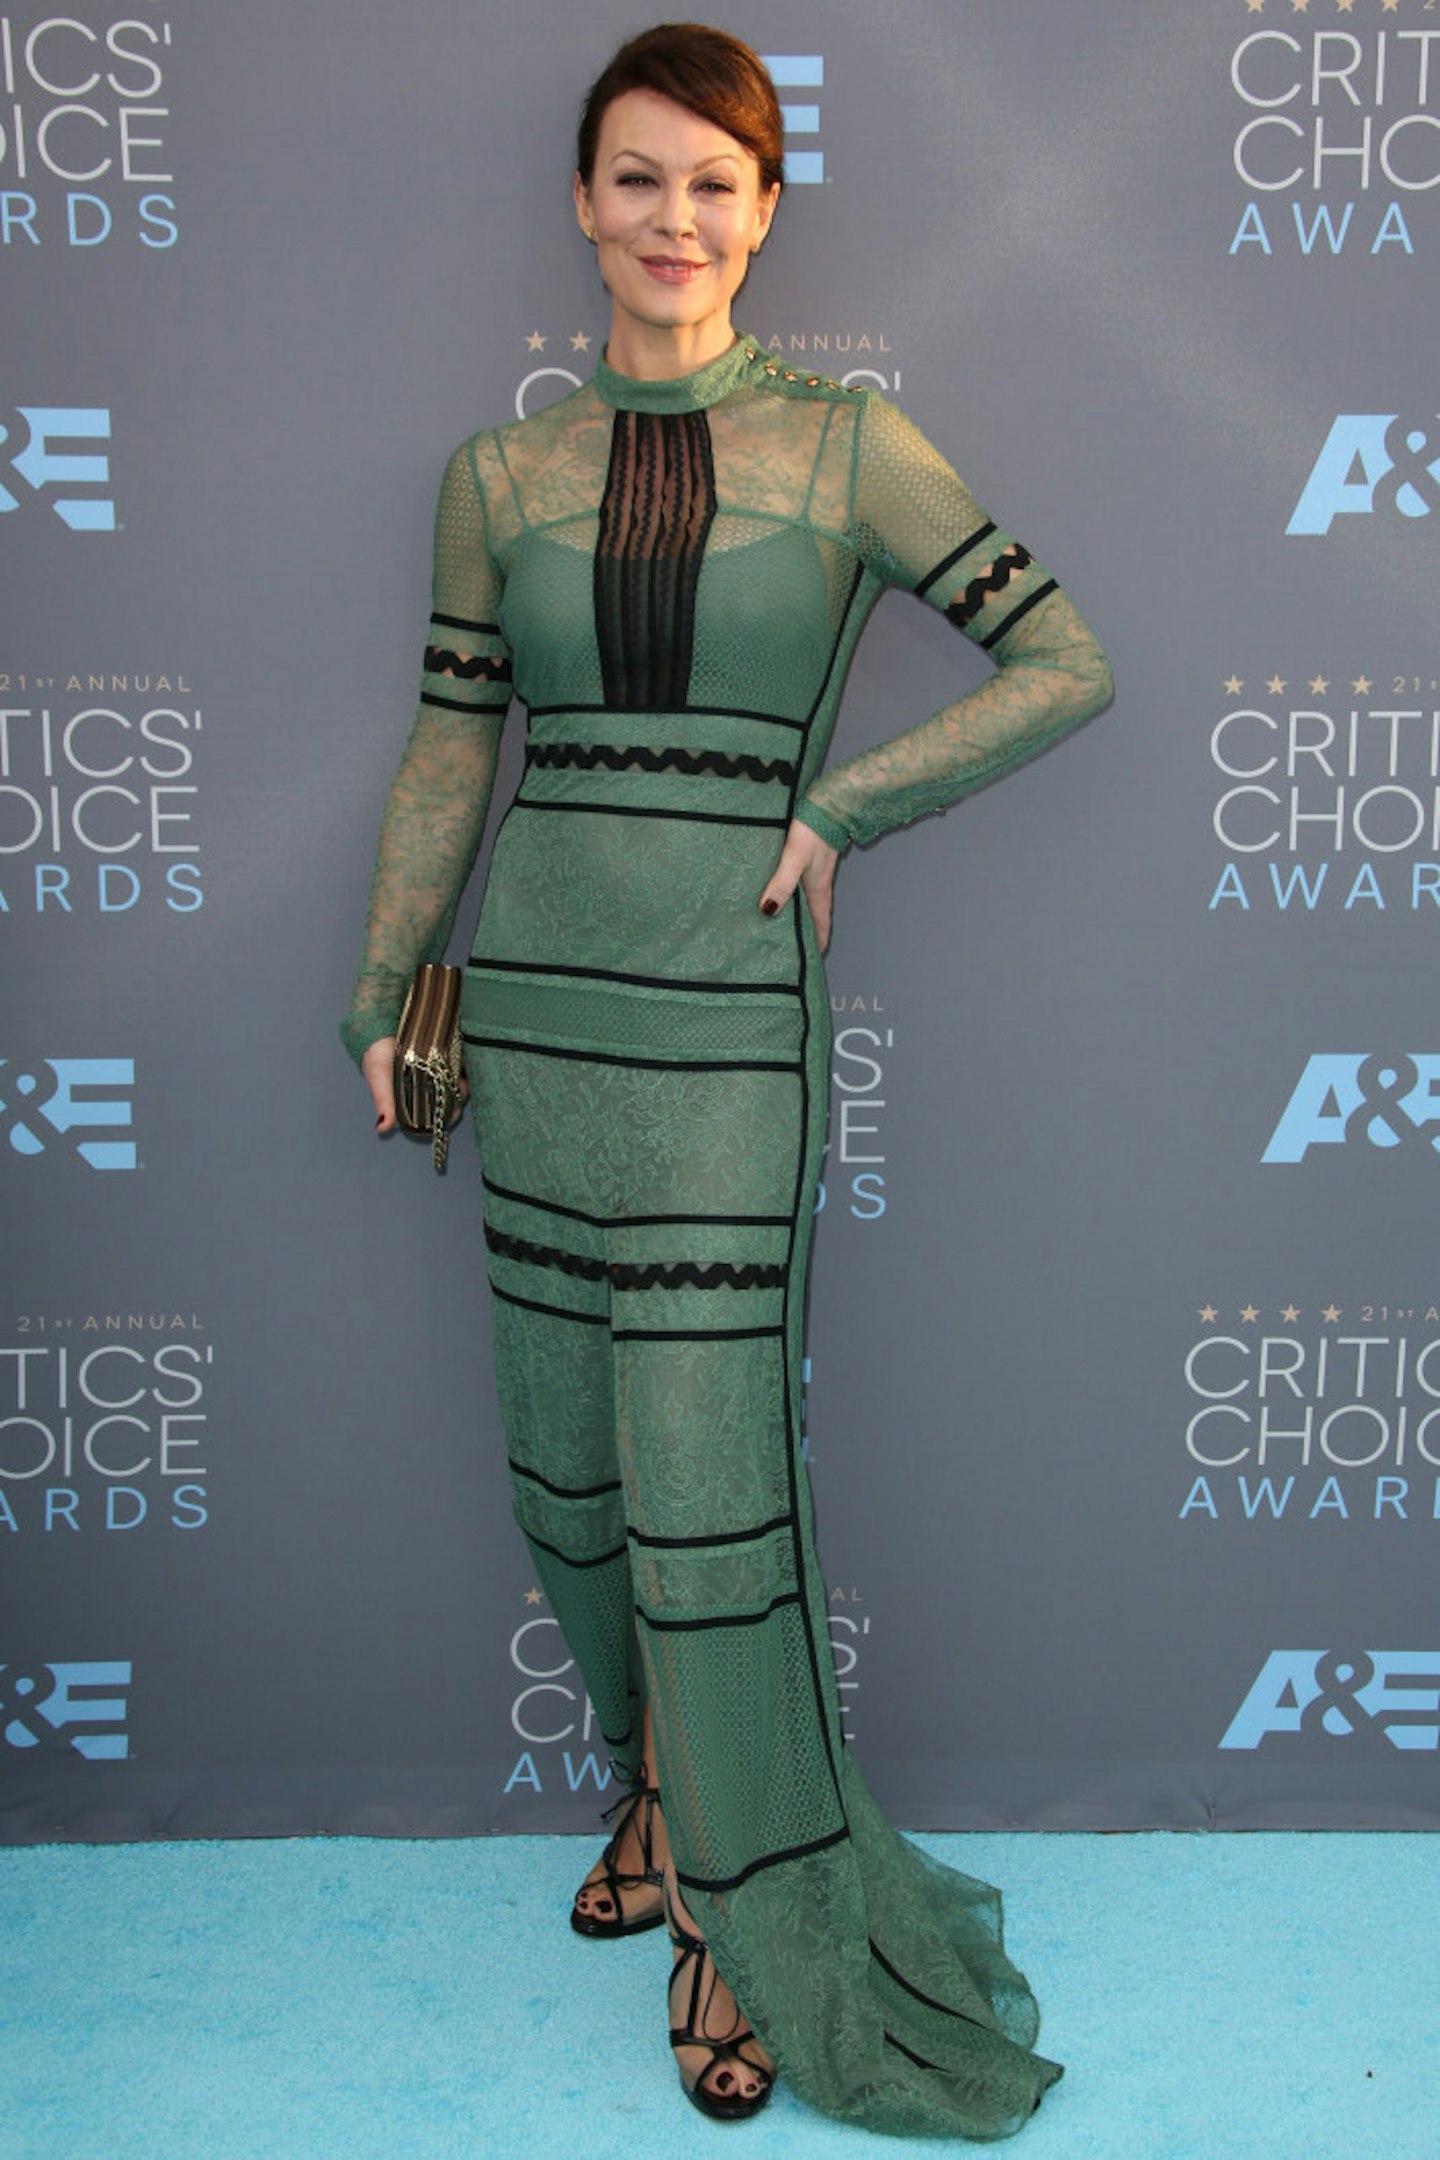 Helen McCrory at the Critics Choice Awards 2016